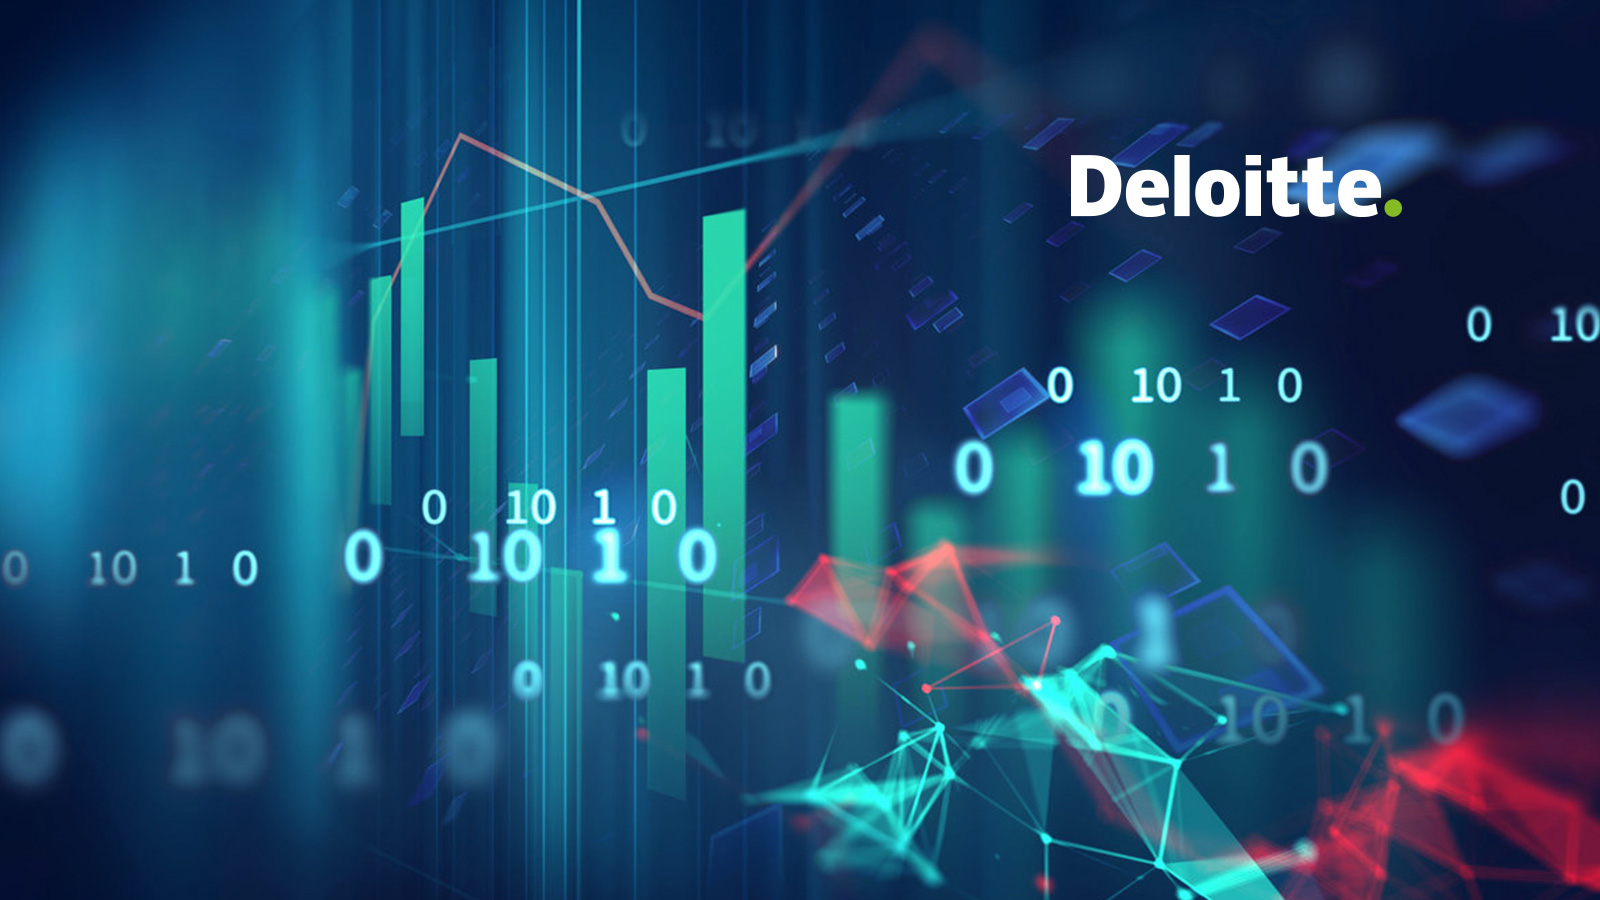 Deloitte Survey: Analytics And Data Driven Culture Help Companies